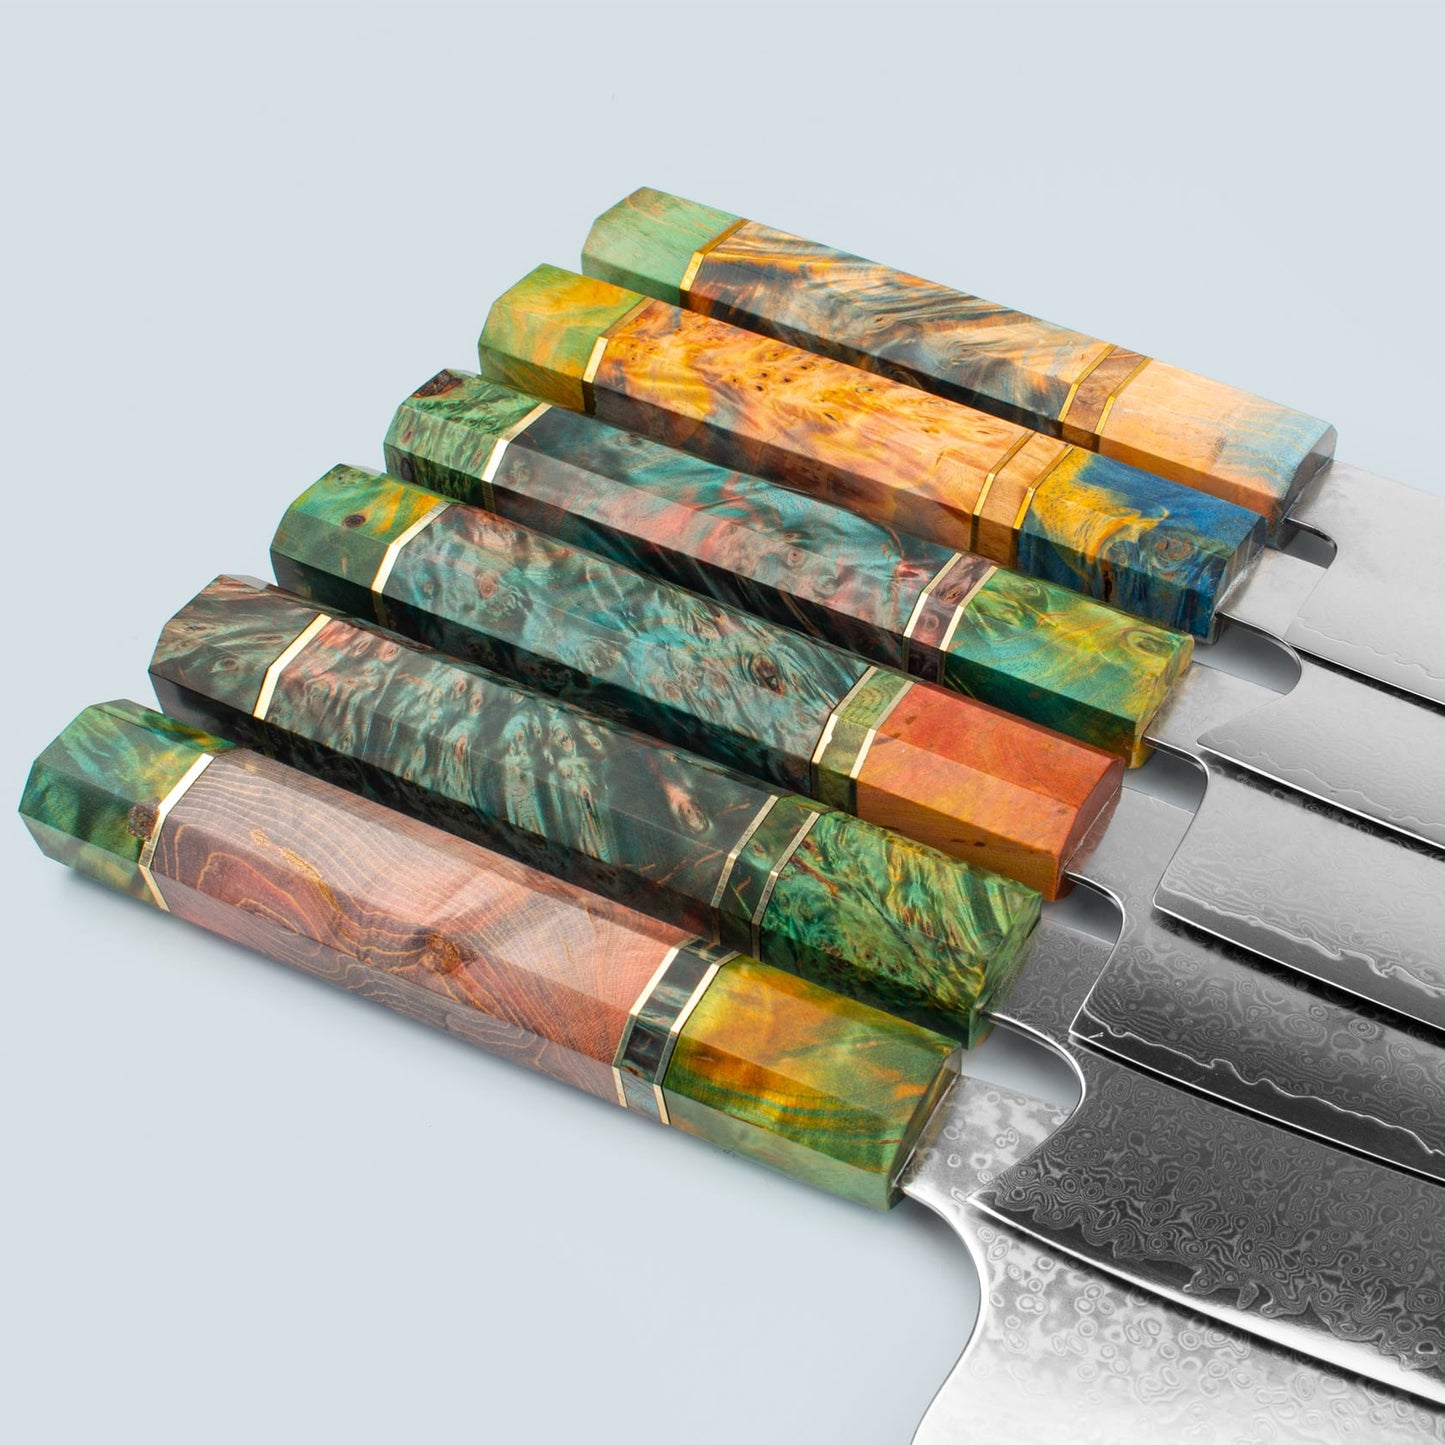 इचिका (いち か か か) रंगीन अष्टकोणीय हैंडल के साथ दमिश्क स्टील चाकू